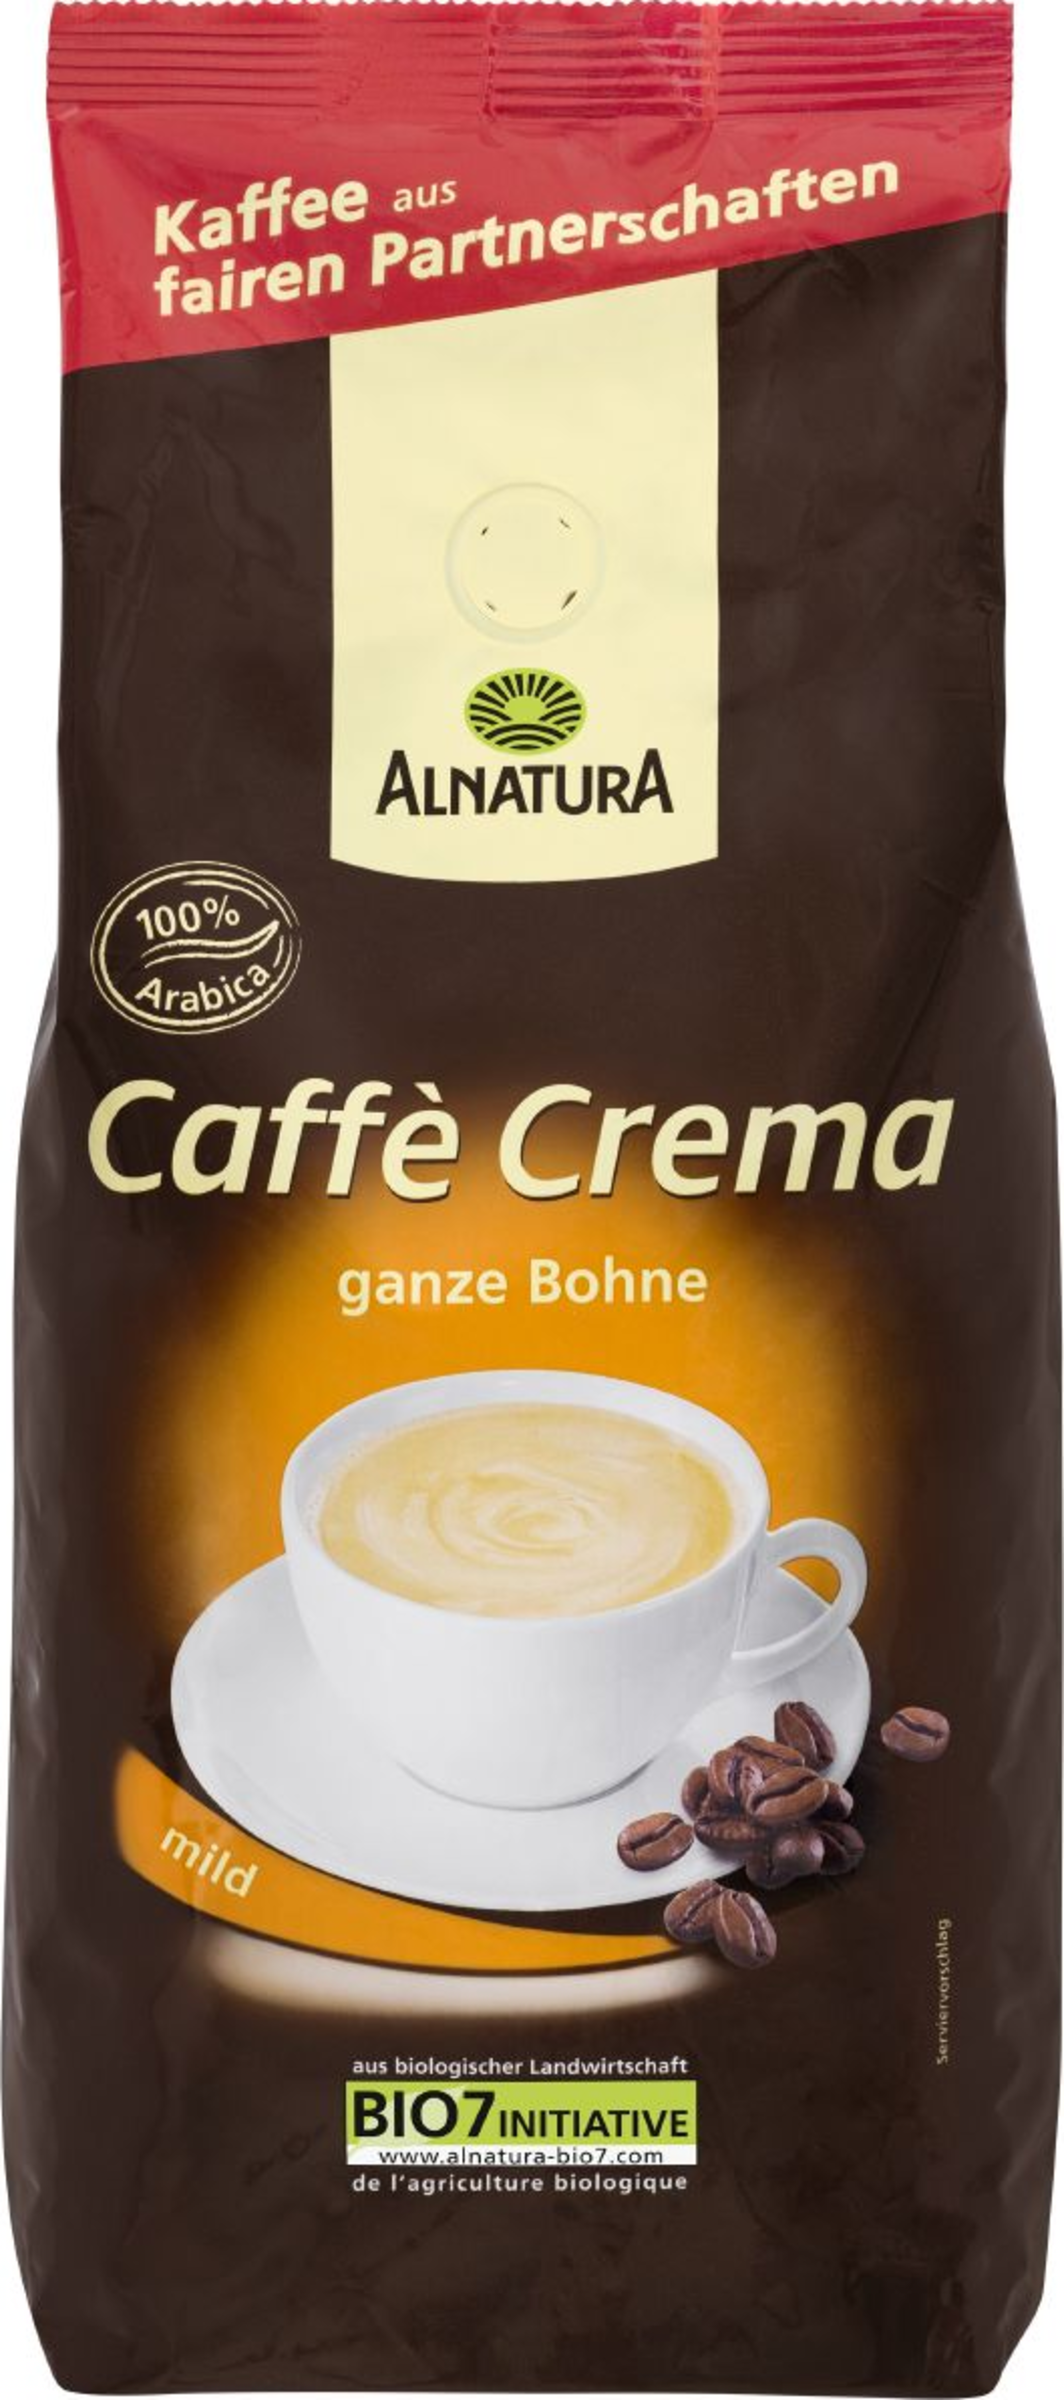 Bio Caffè Crema, whole bean